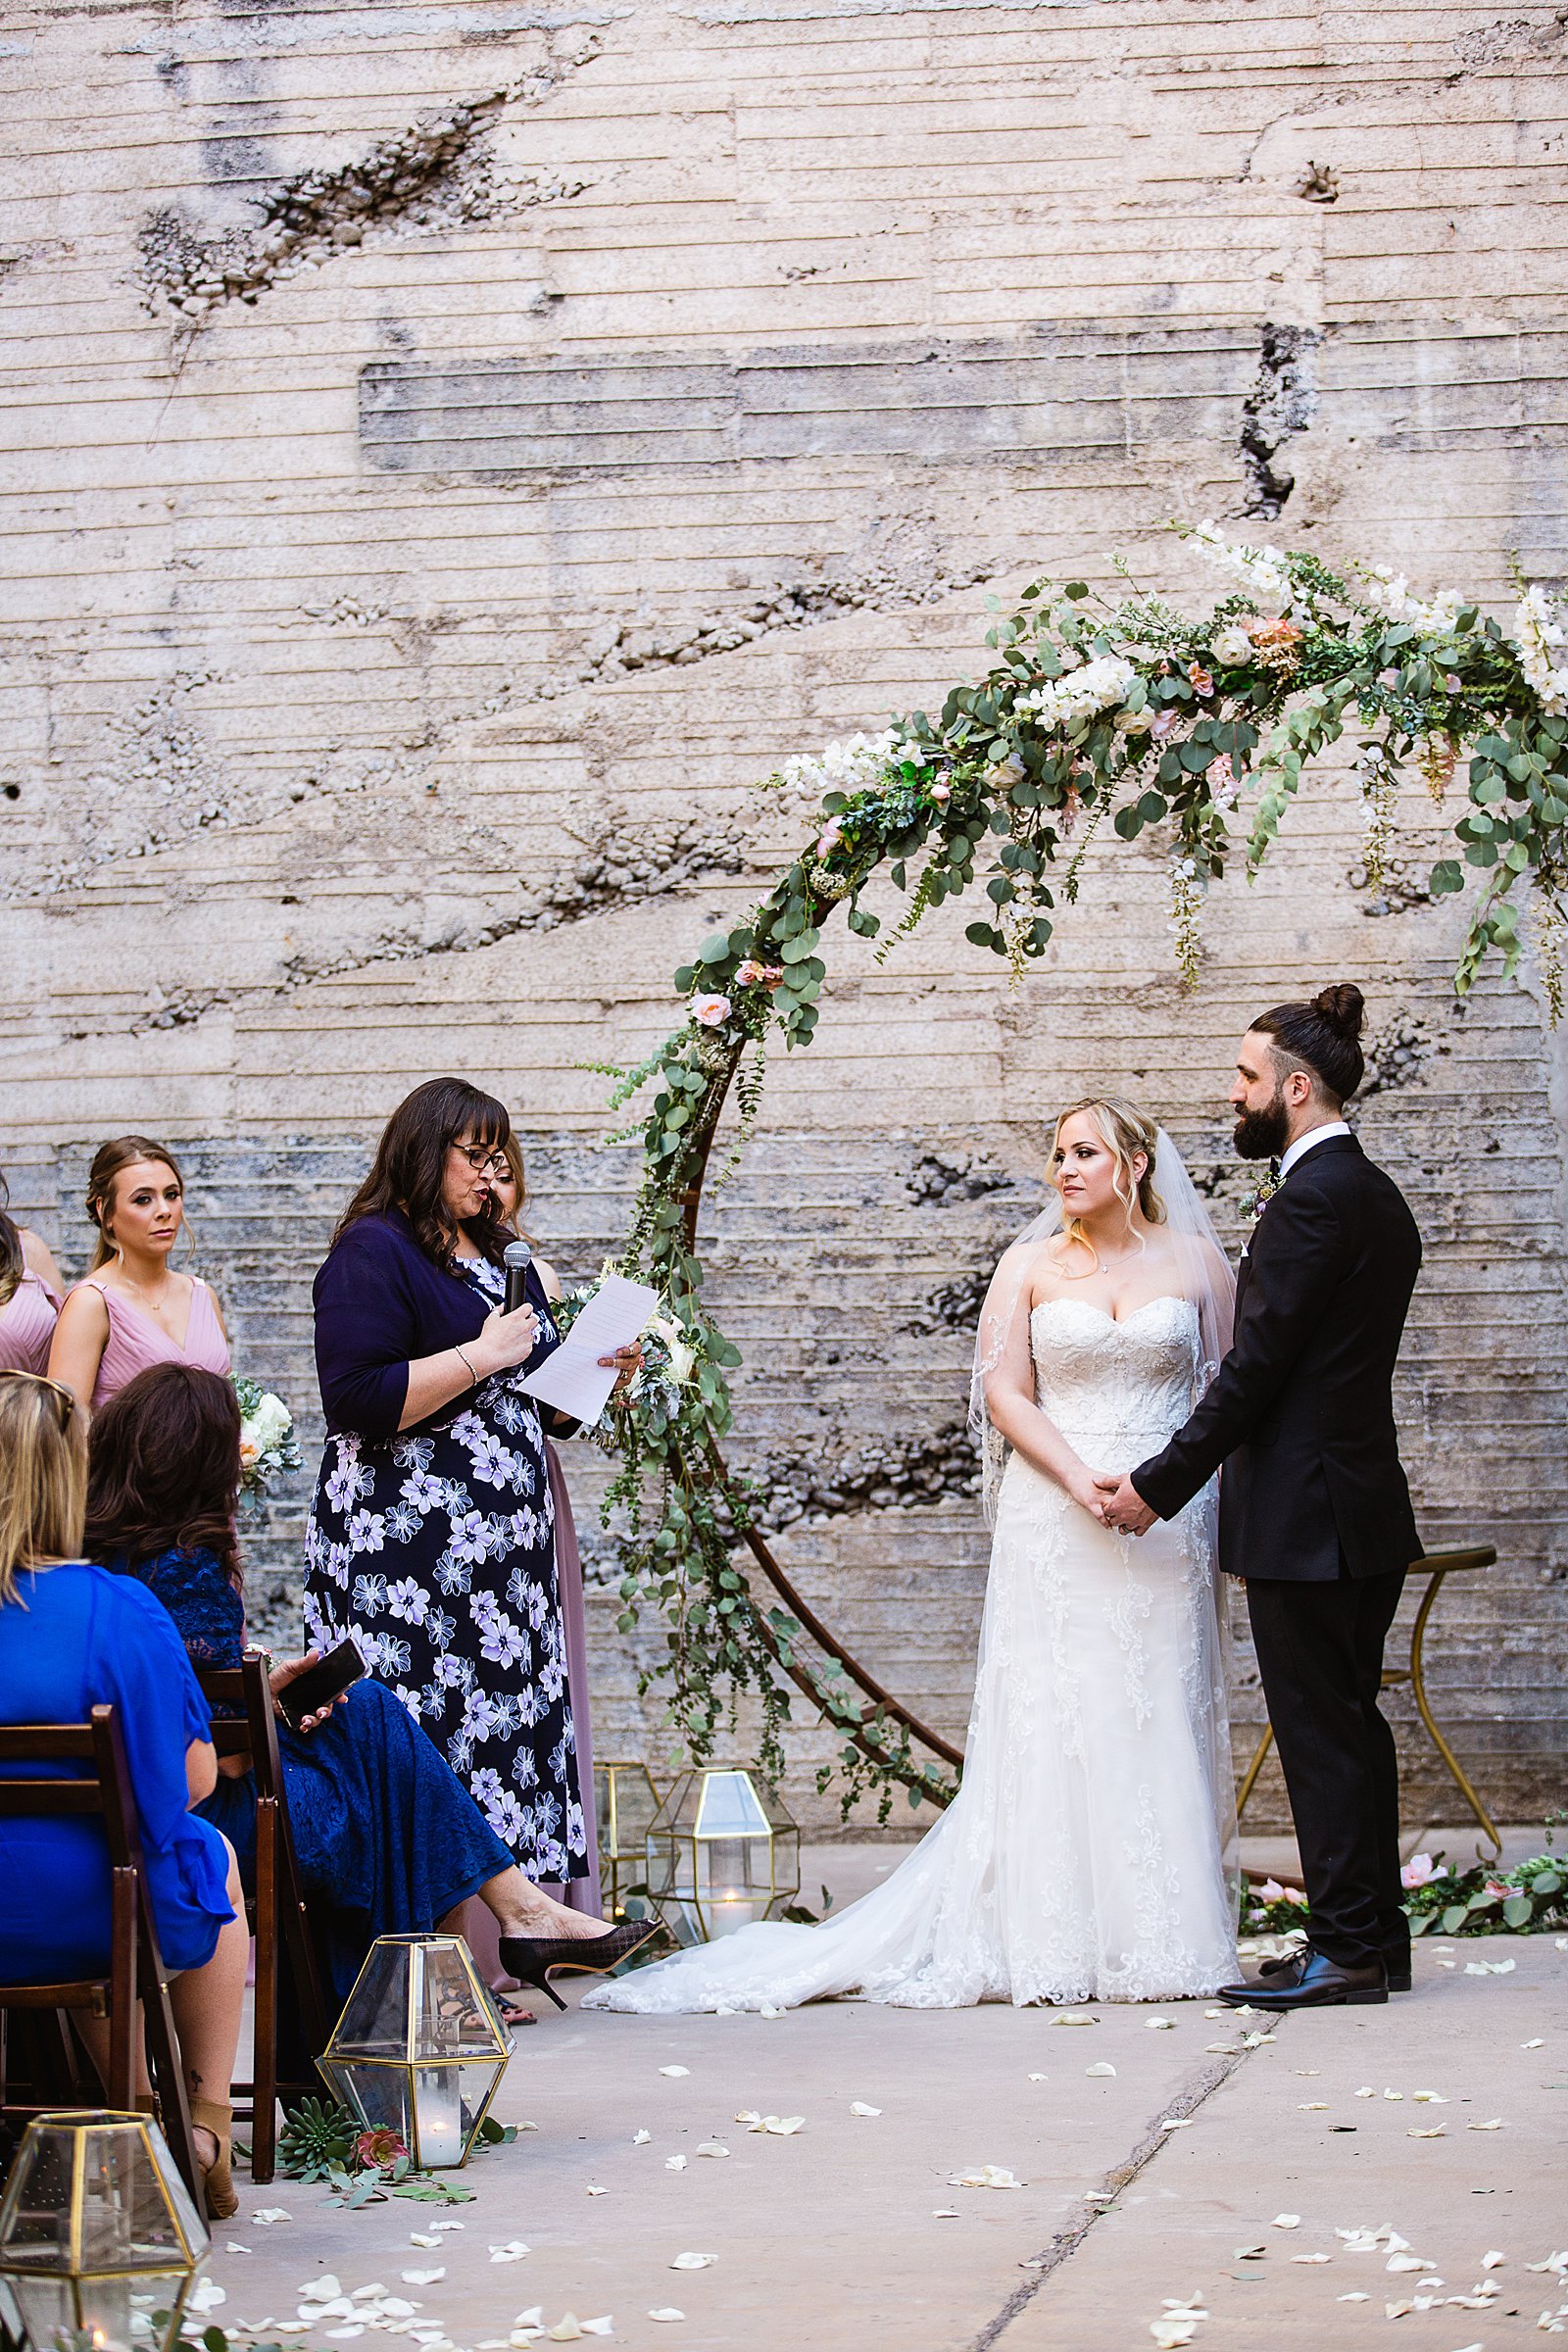 Wedding ceremony at The Ice House by Phoenix wedding photographer PMA Photography.